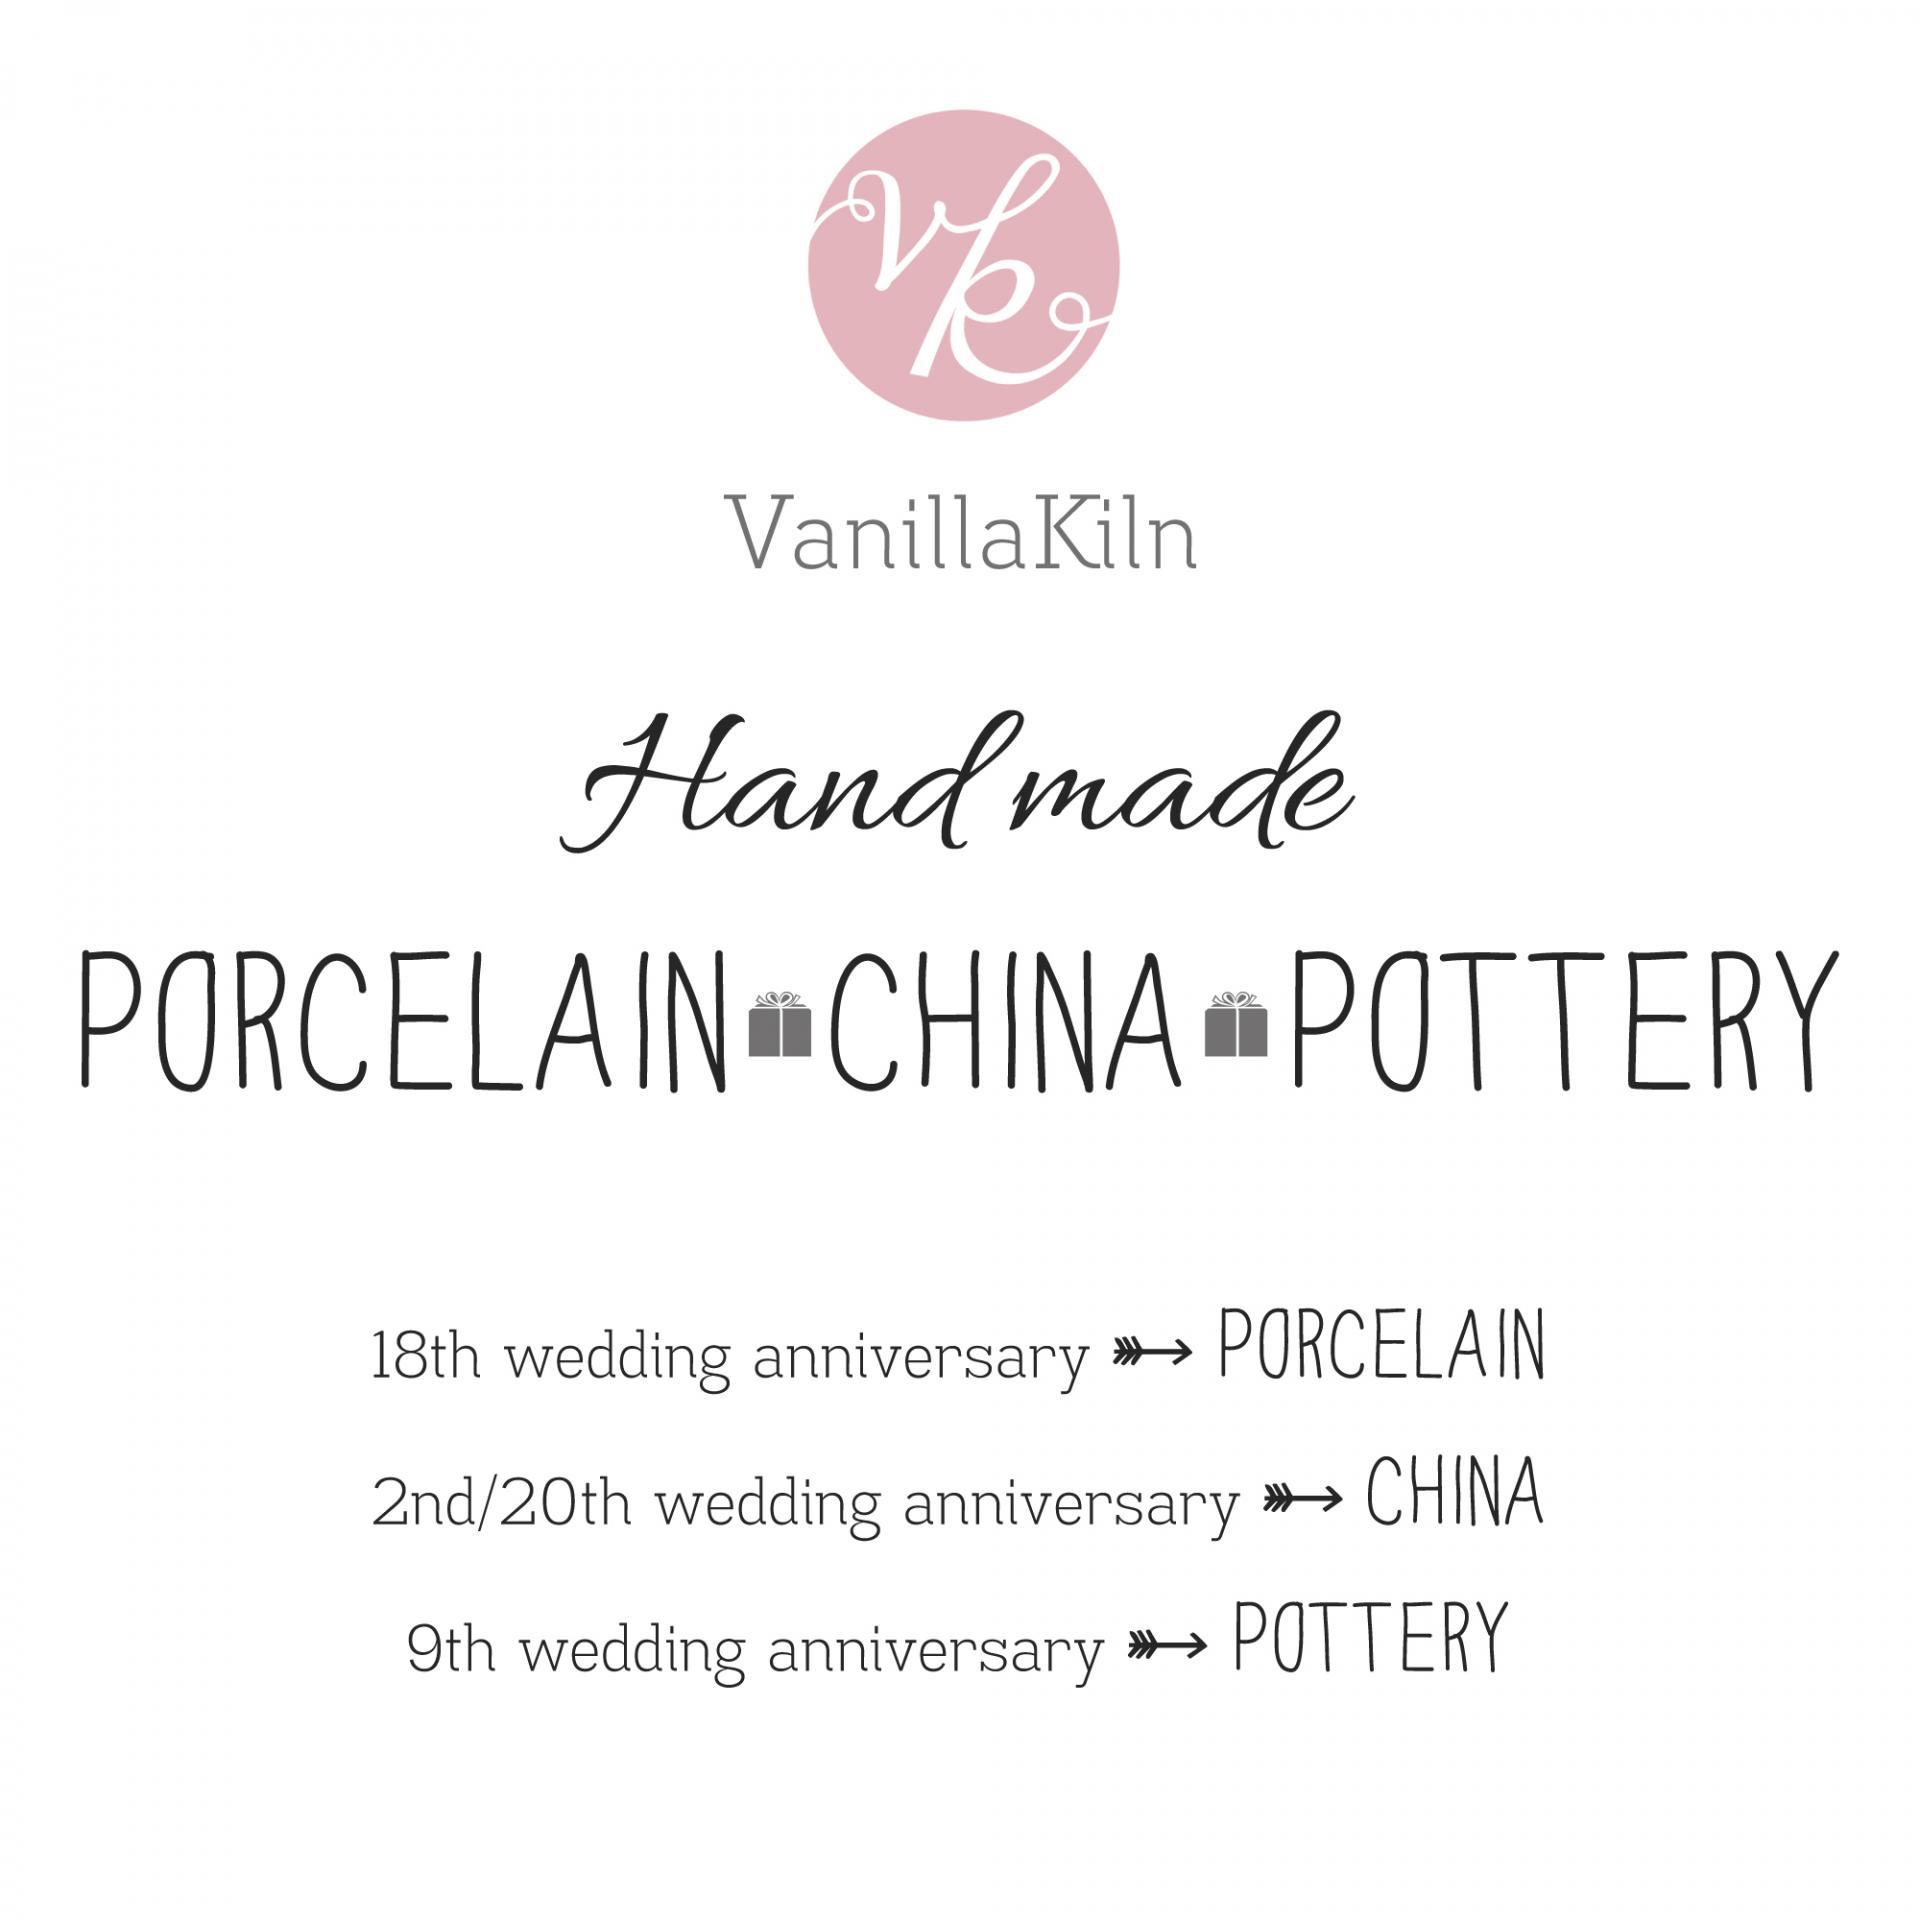 VanillaKiln hand made porcelain (18th anniversary) china (2nd/20th anniversary) pottery (9th anniversary).